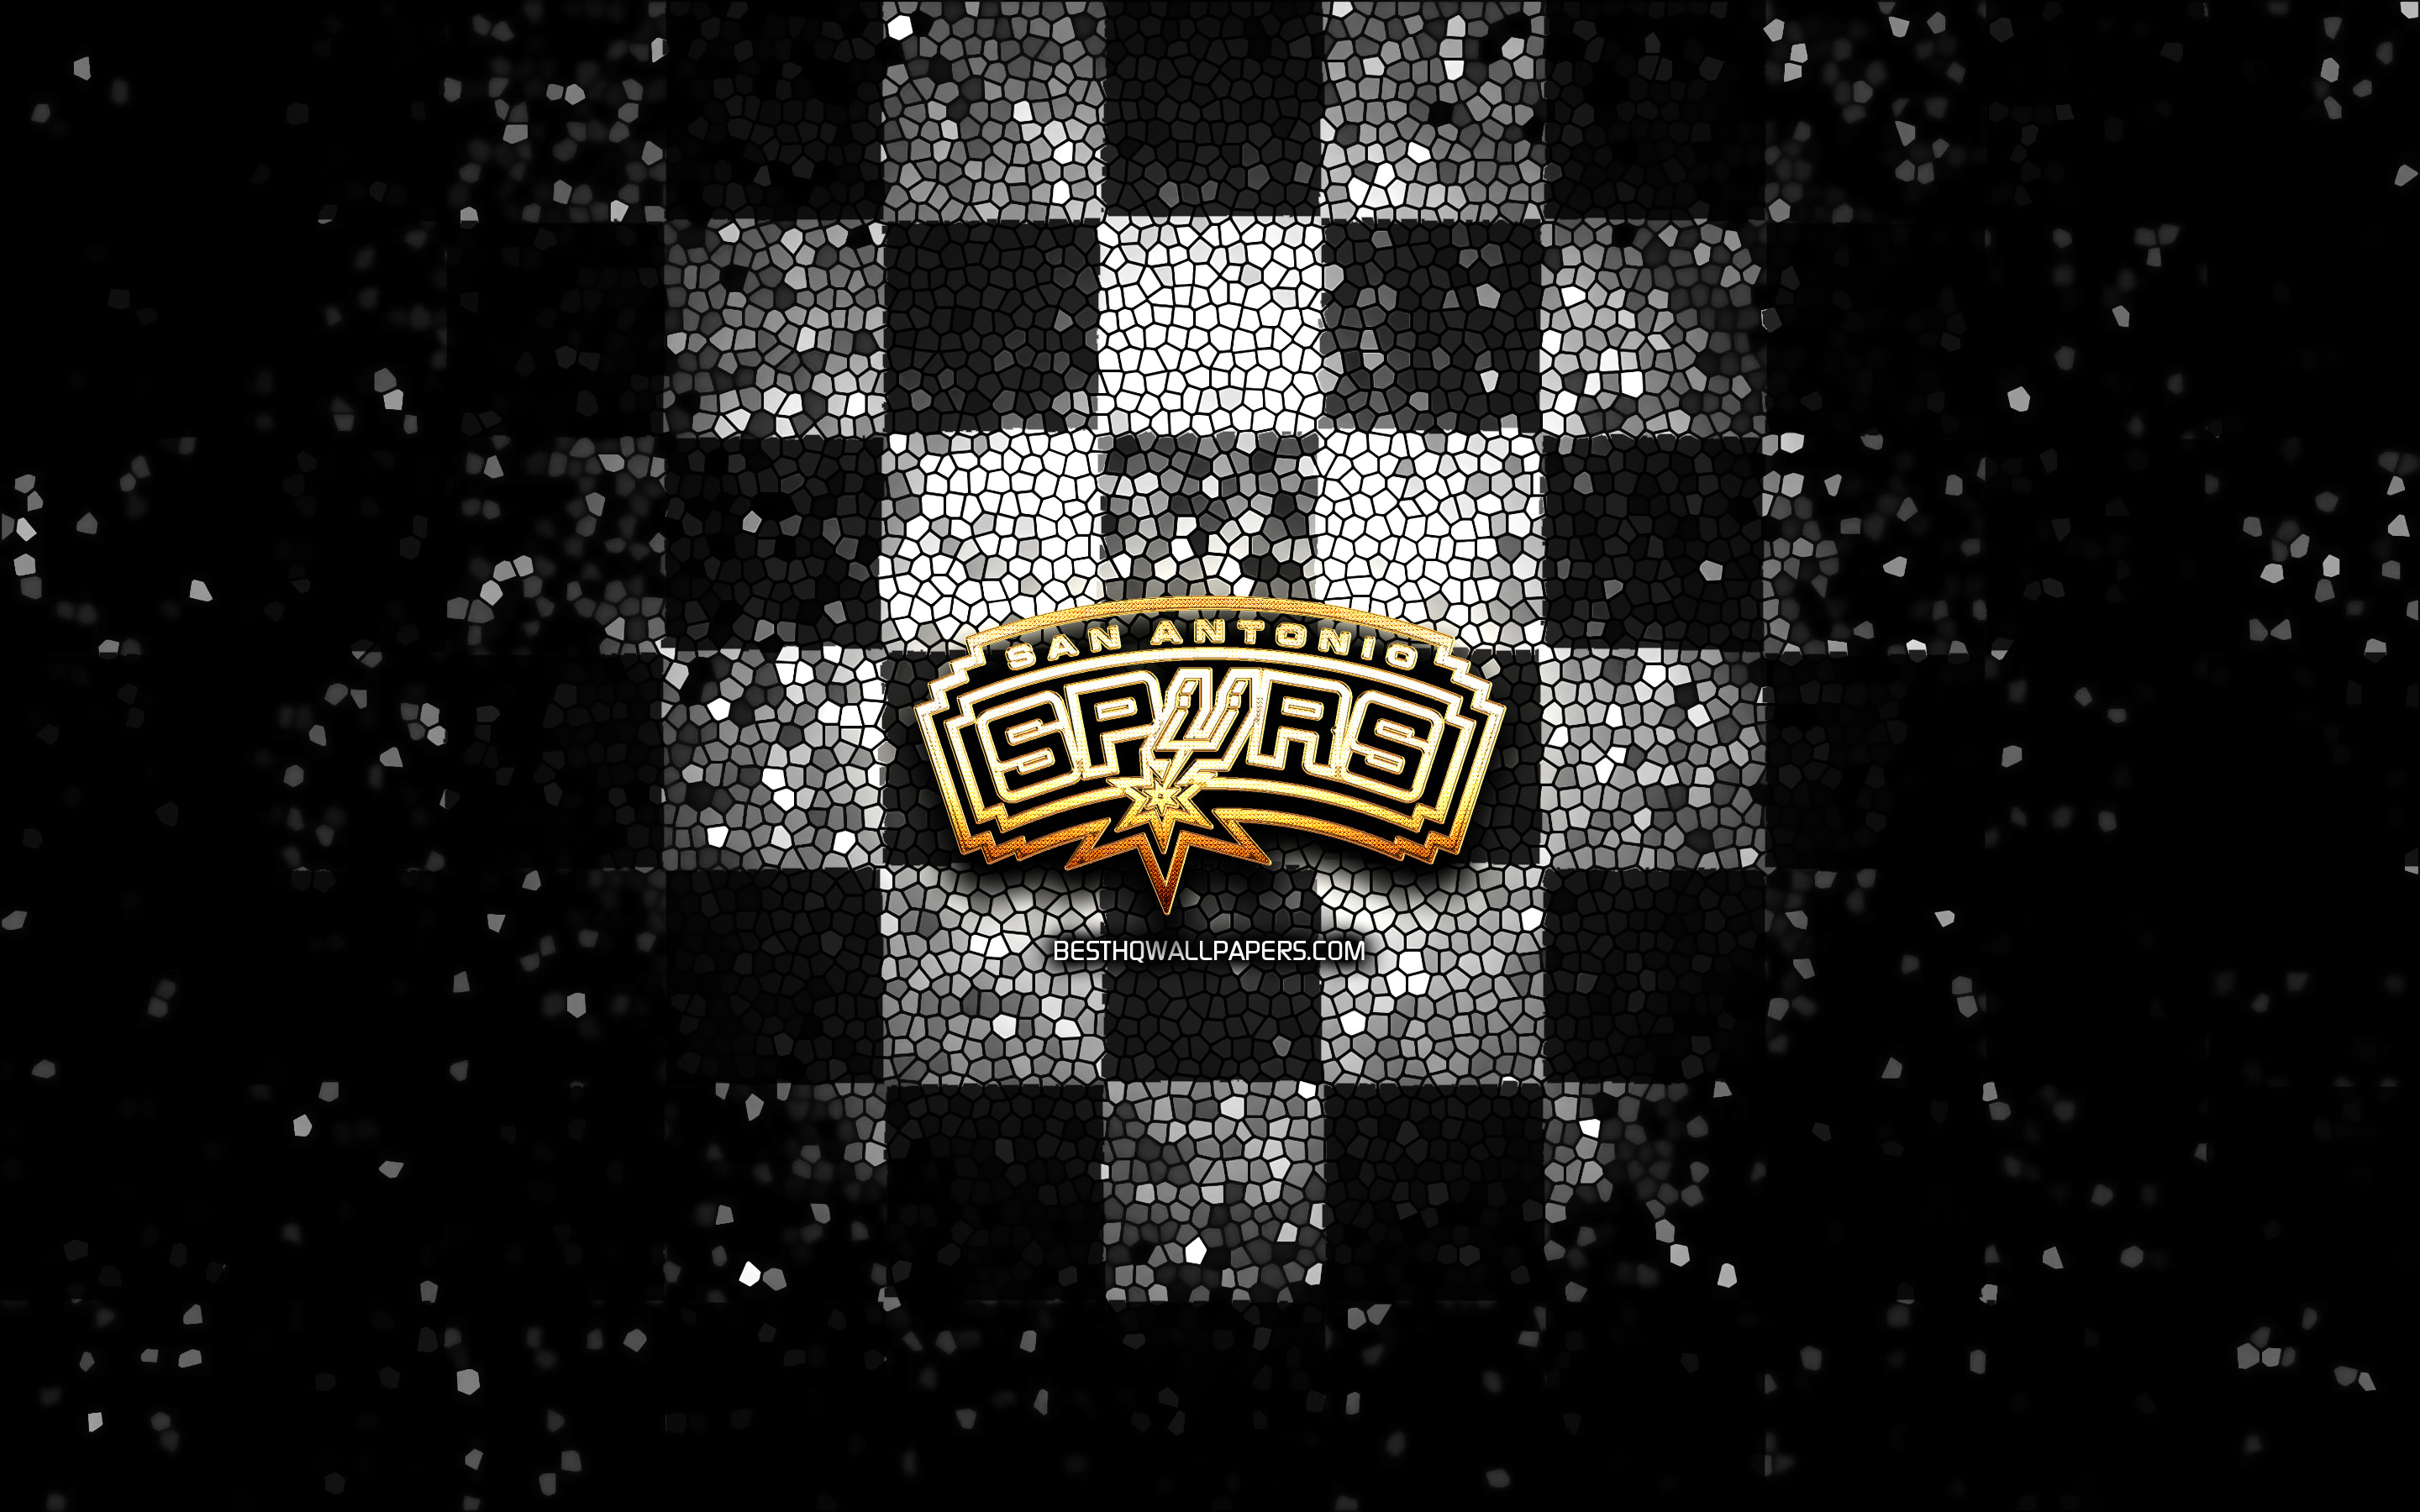 Download wallpaper San Antonio Spurs, glitter logo, NBA, black white checkered background, USA, american basketball team, San Antonio Spurs logo, mosaic art, basketball, America for desktop with resolution 2880x1800. High Quality HD